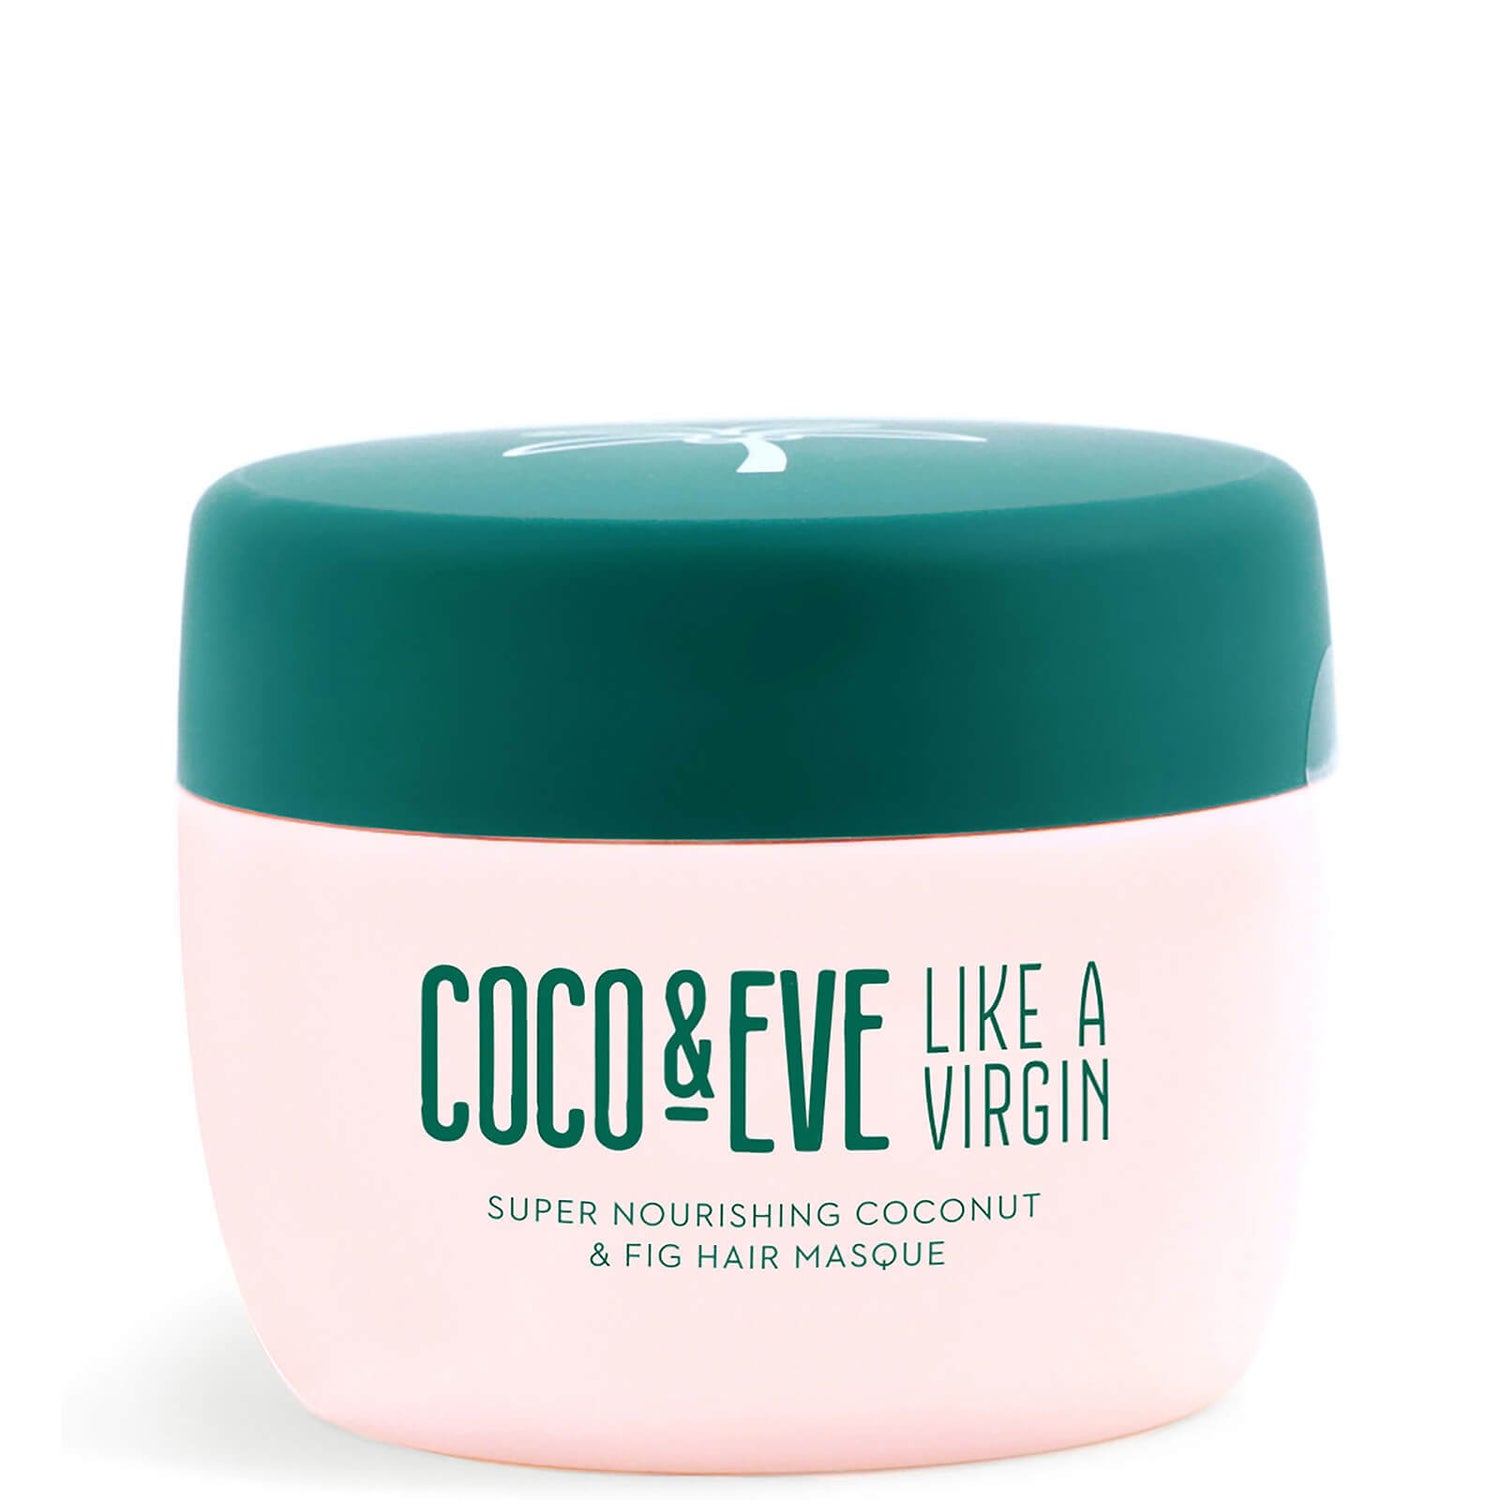 Coco & Eve Like A Virgin Super Nourishing Coconut & Fig Hair Masque - 212ml